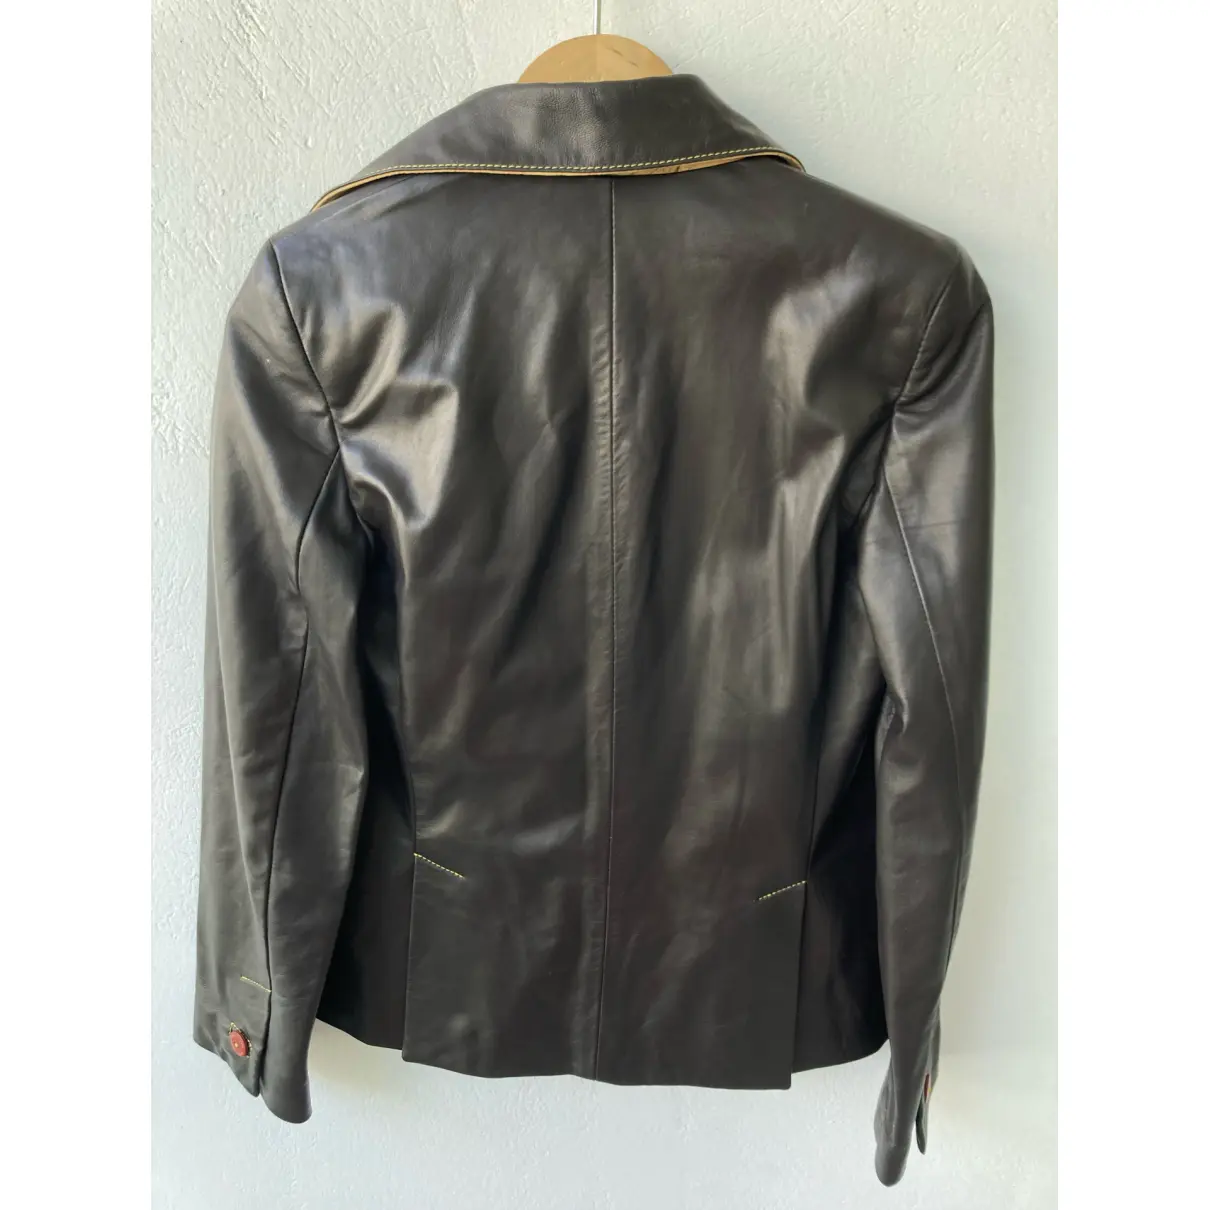 Buy ALVIERO MARTINI Leather jacket online